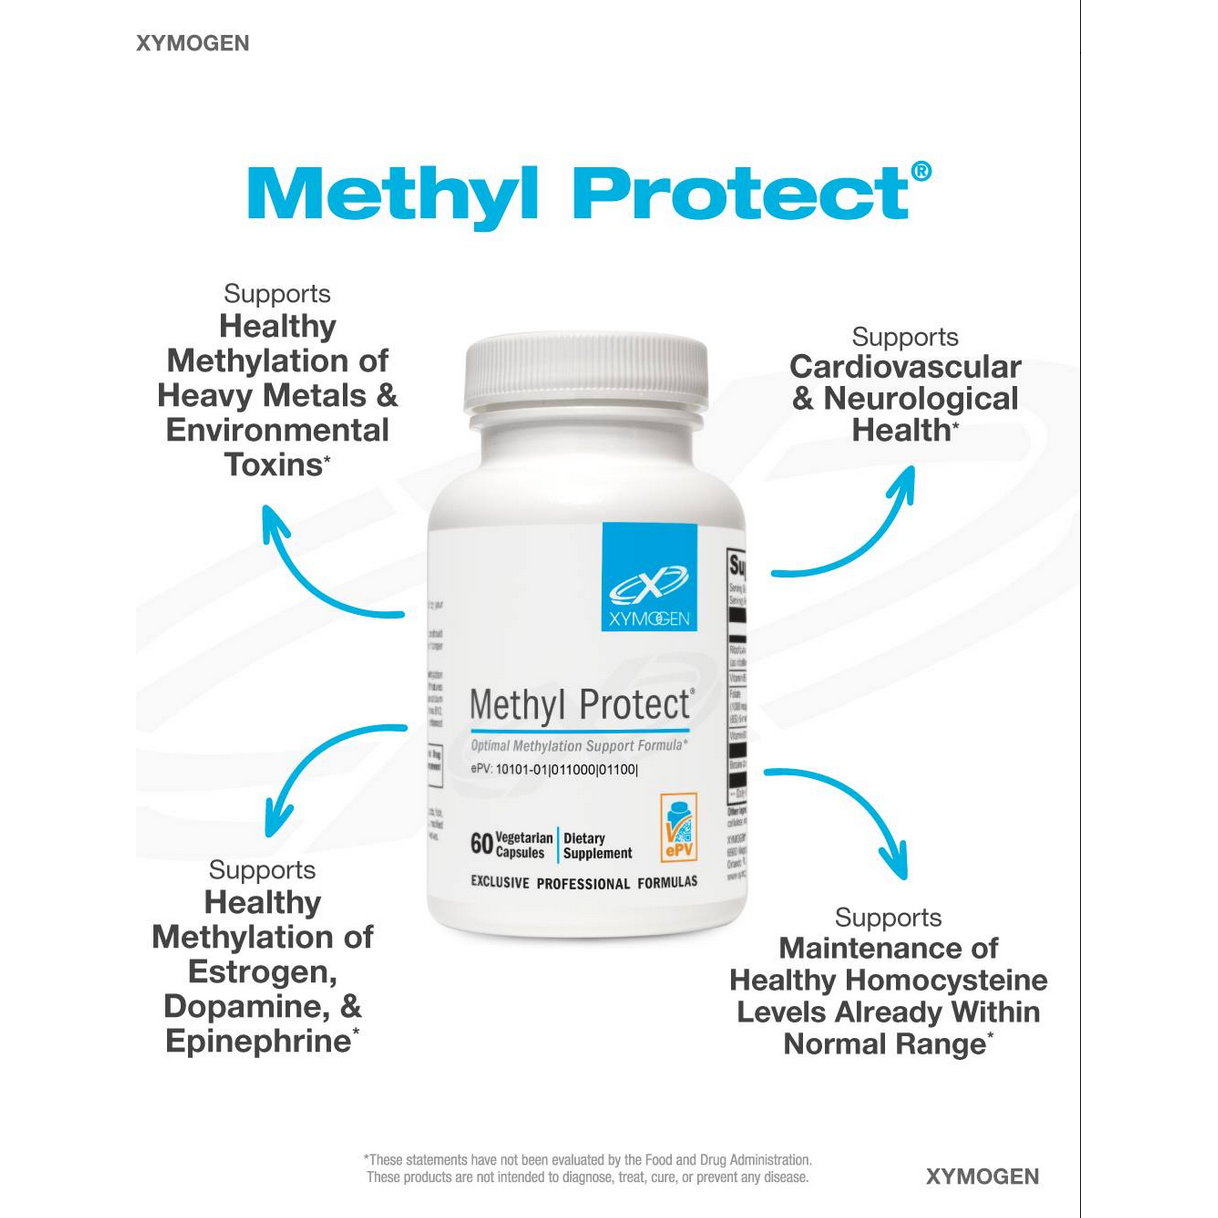 Methyl Protect 60 Capsules